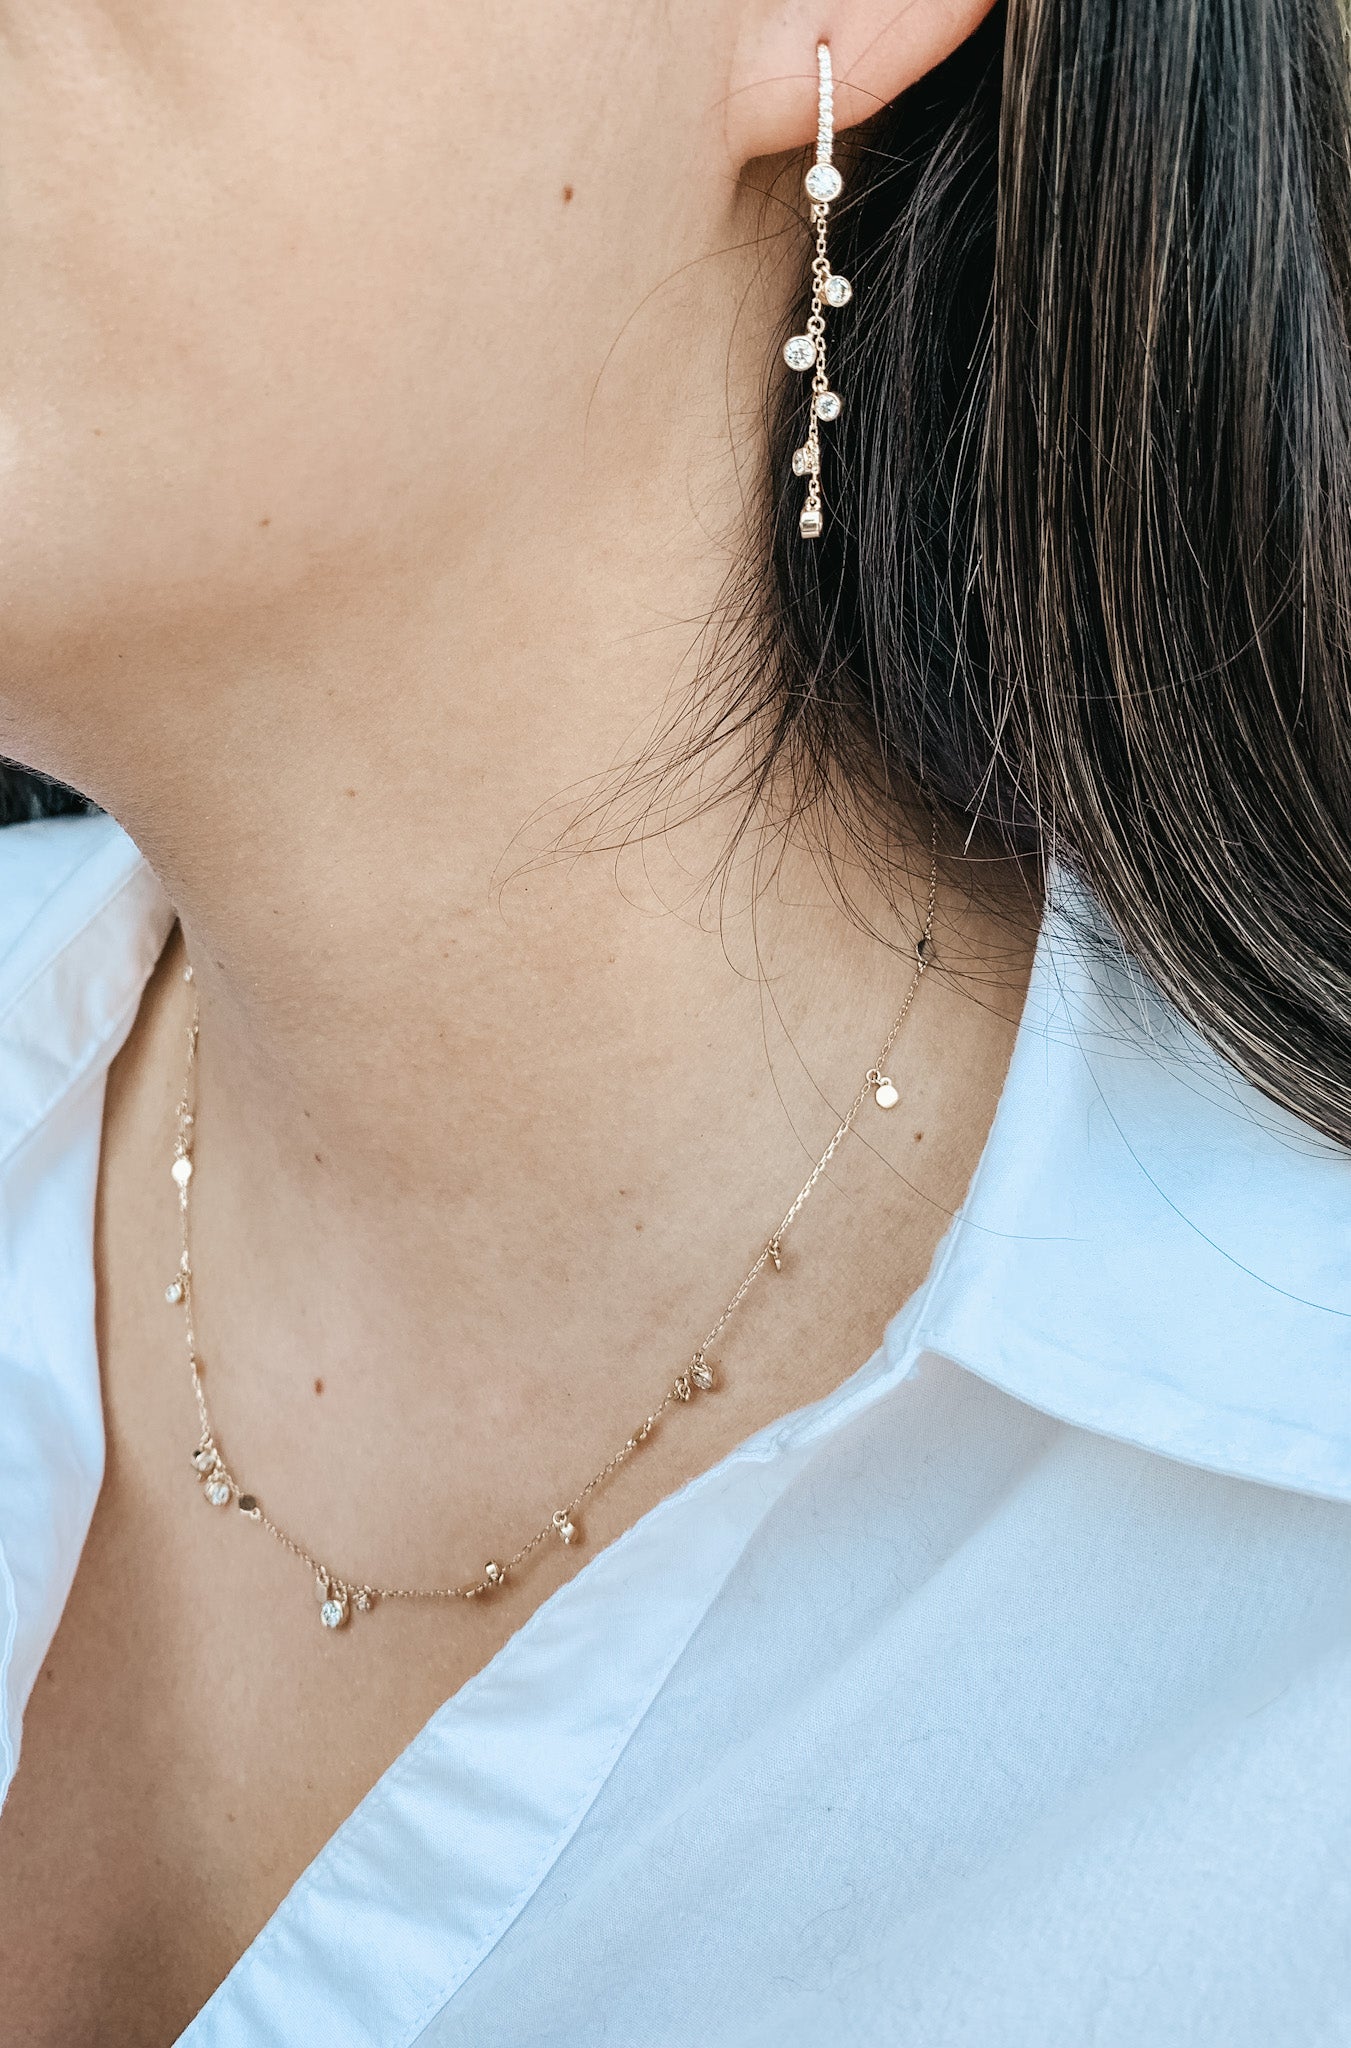 Bezel-set Diamond Necklace